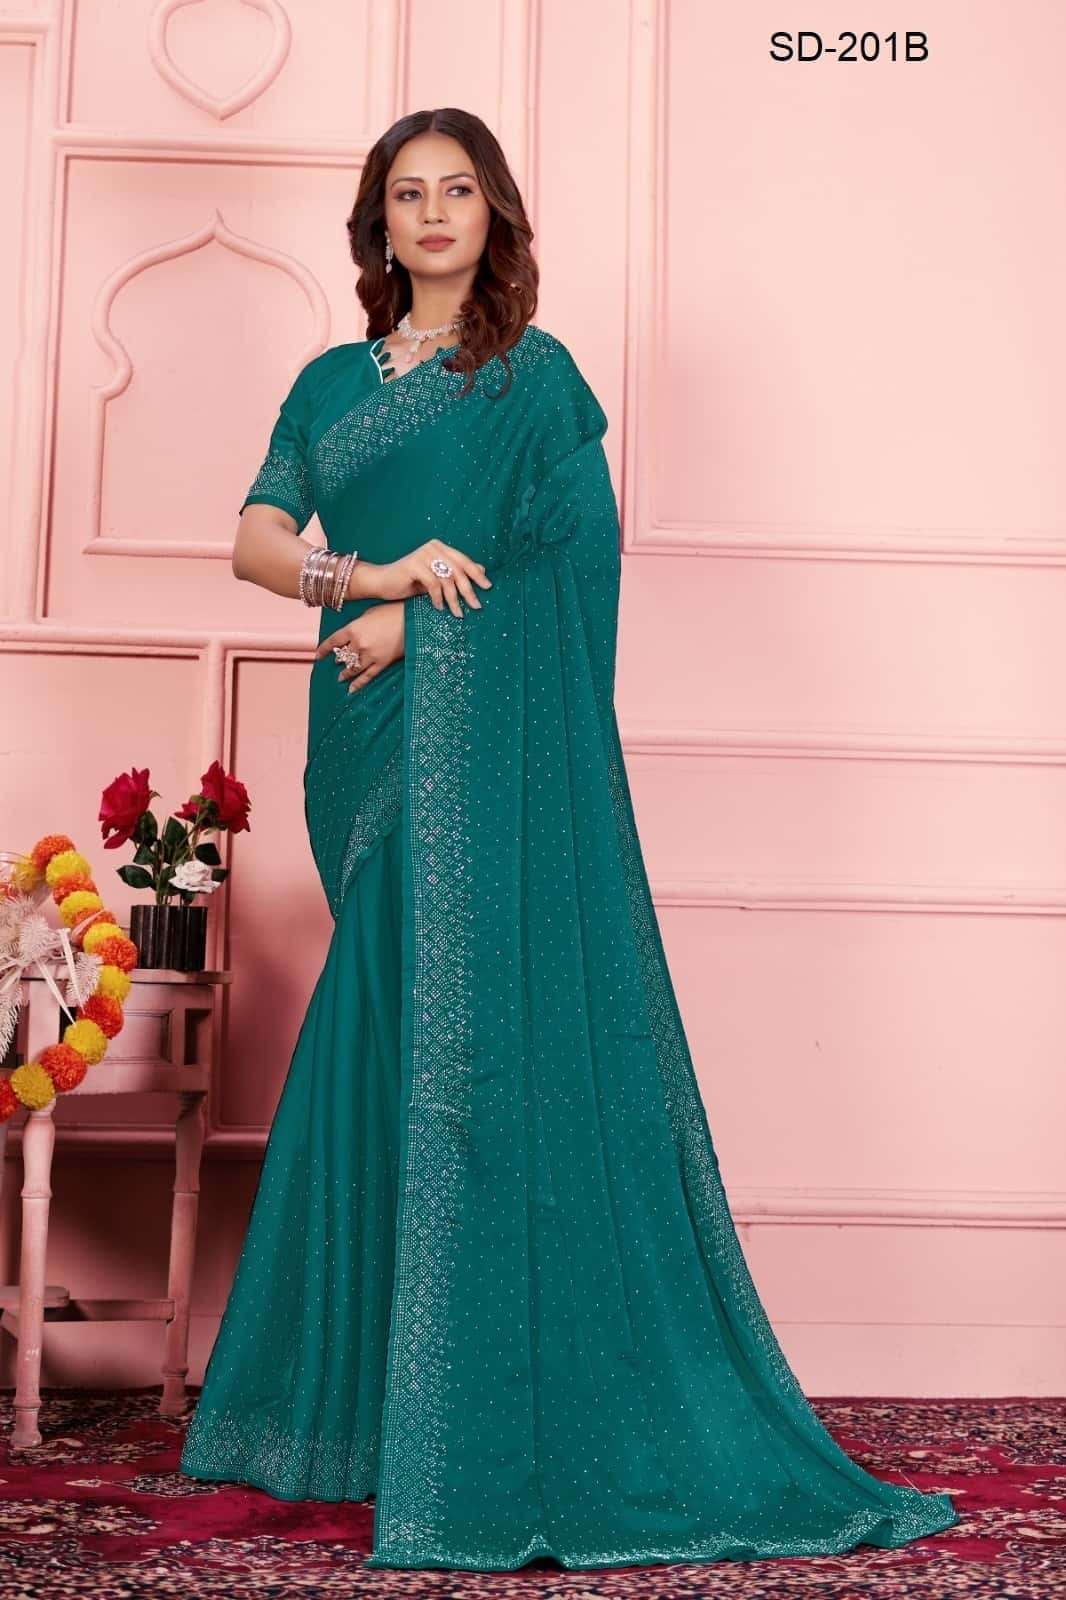 Suma Designer 201 Colors Latest Festive Wear Designer Saree Online Suppliers